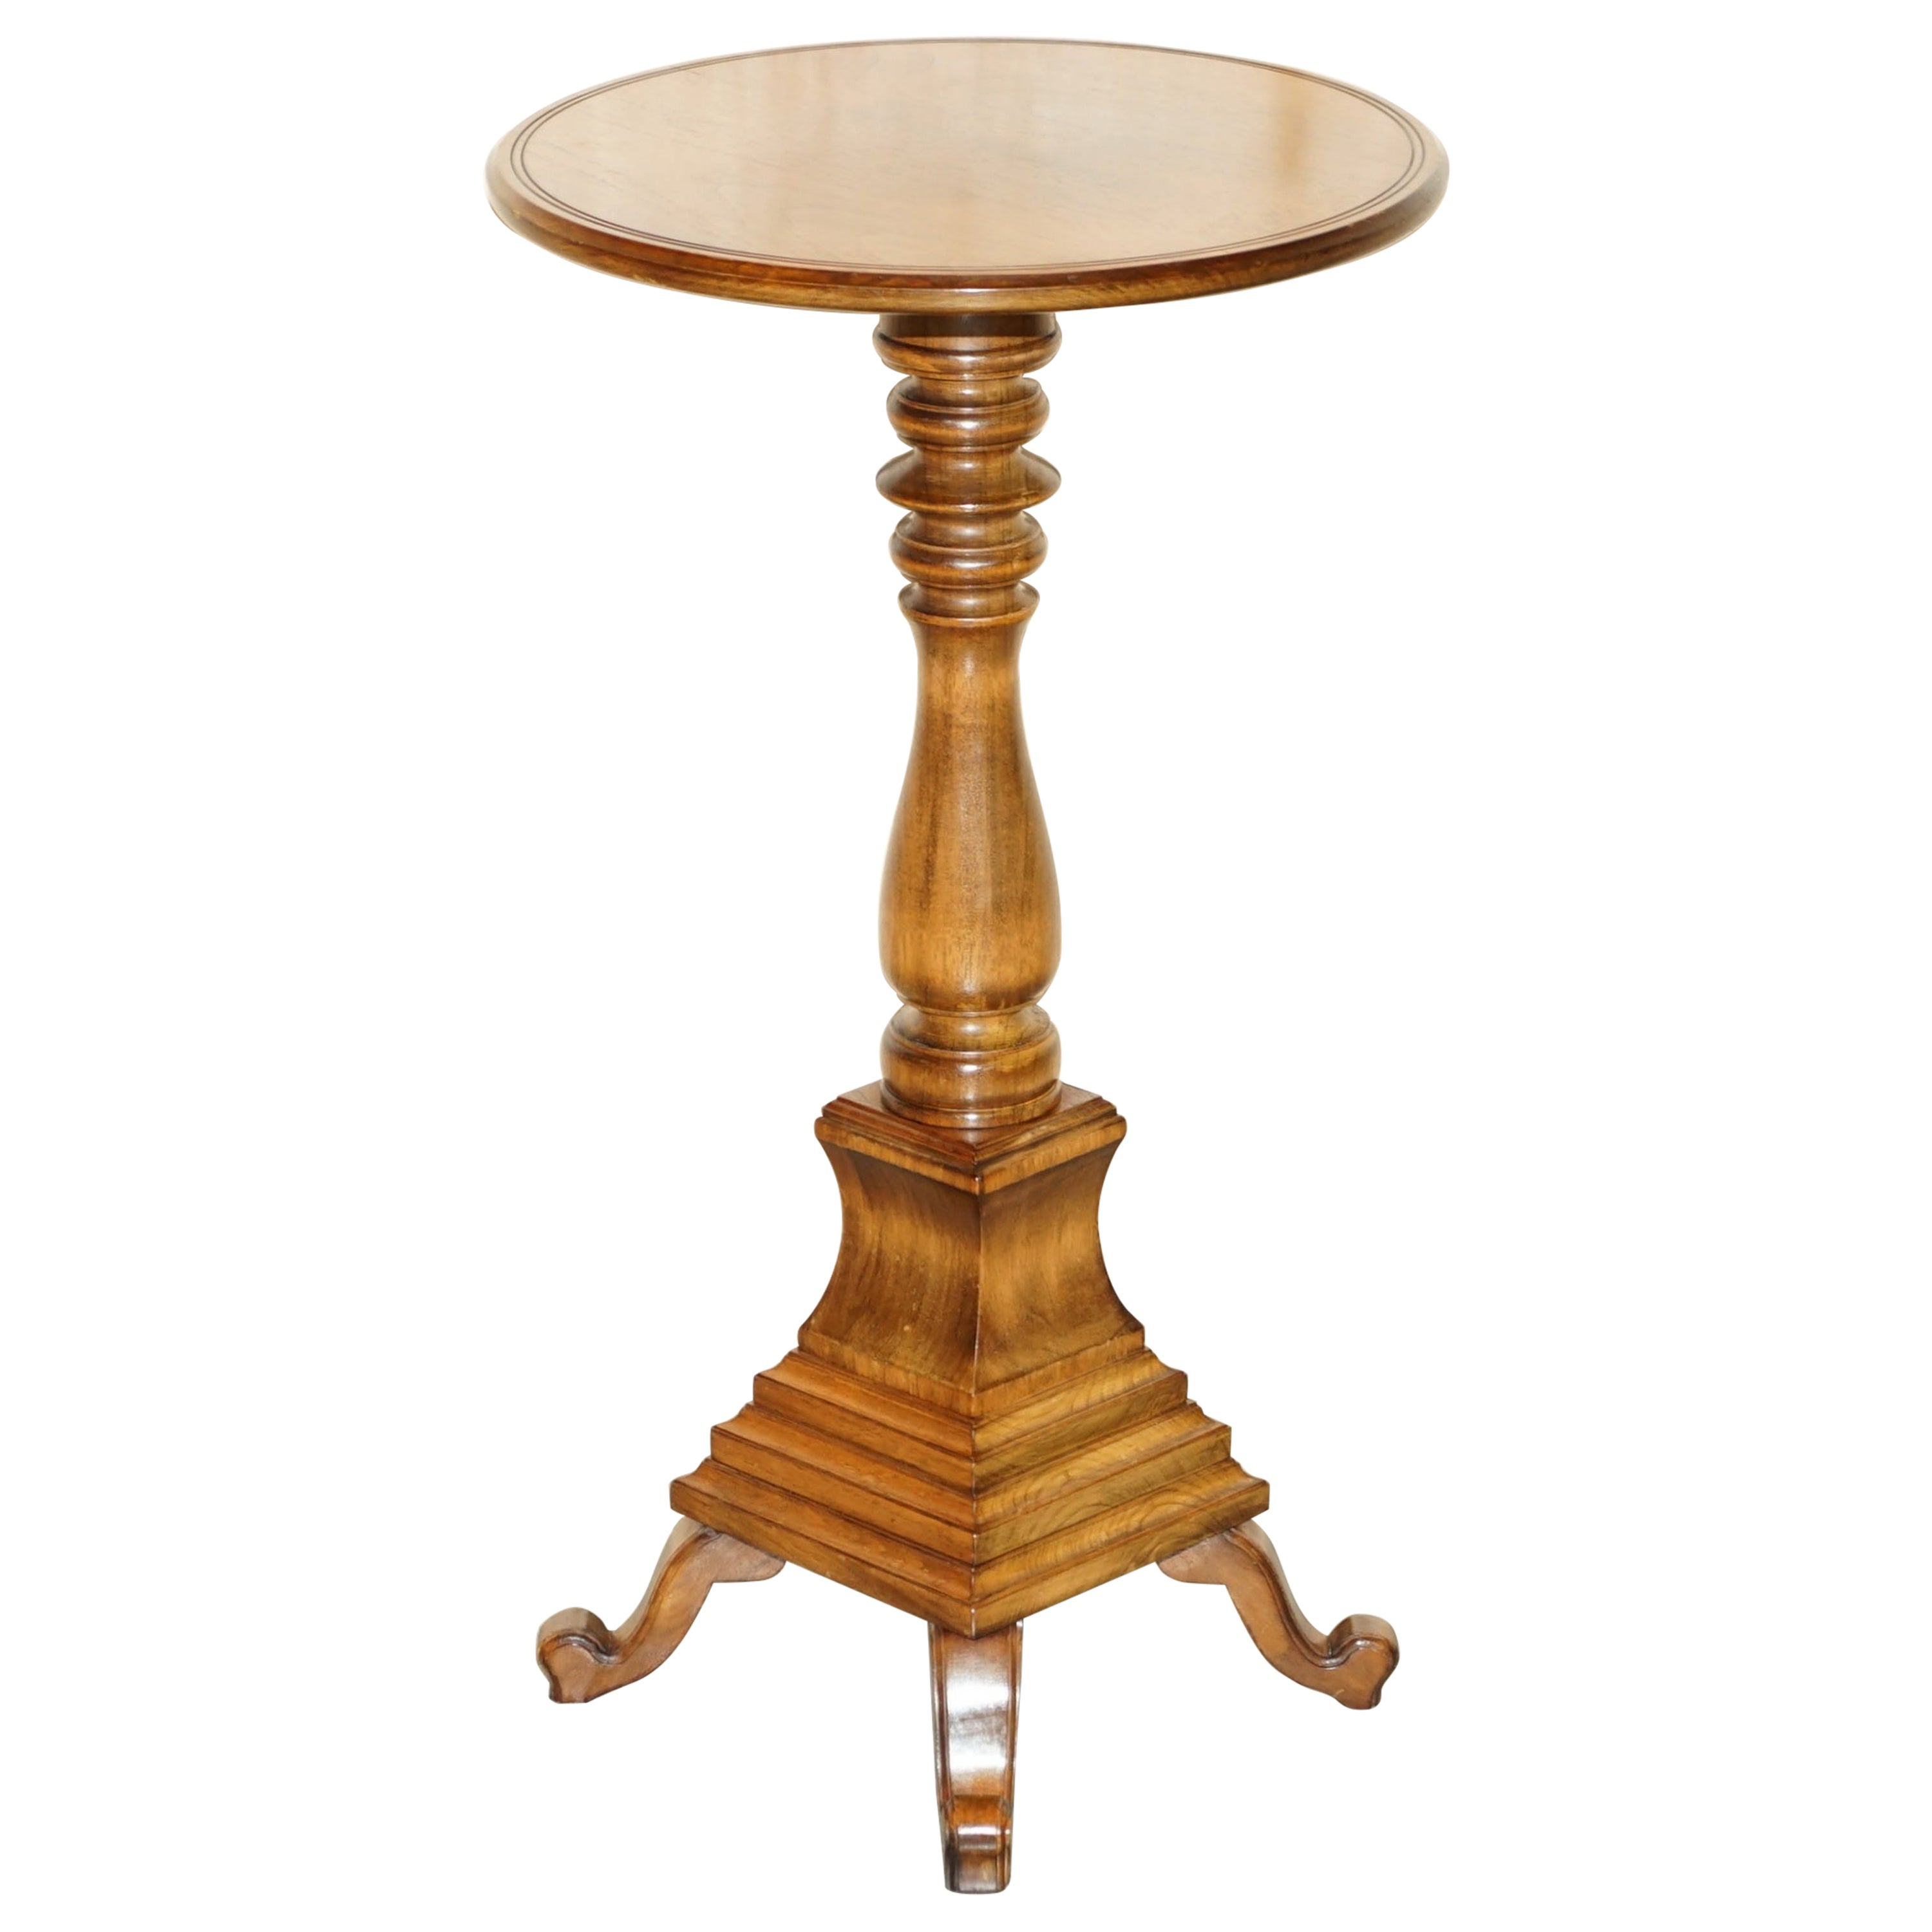 Fine English Made JB Wright Cabinet Maker Regency Revival Side End Lamp Table For Sale